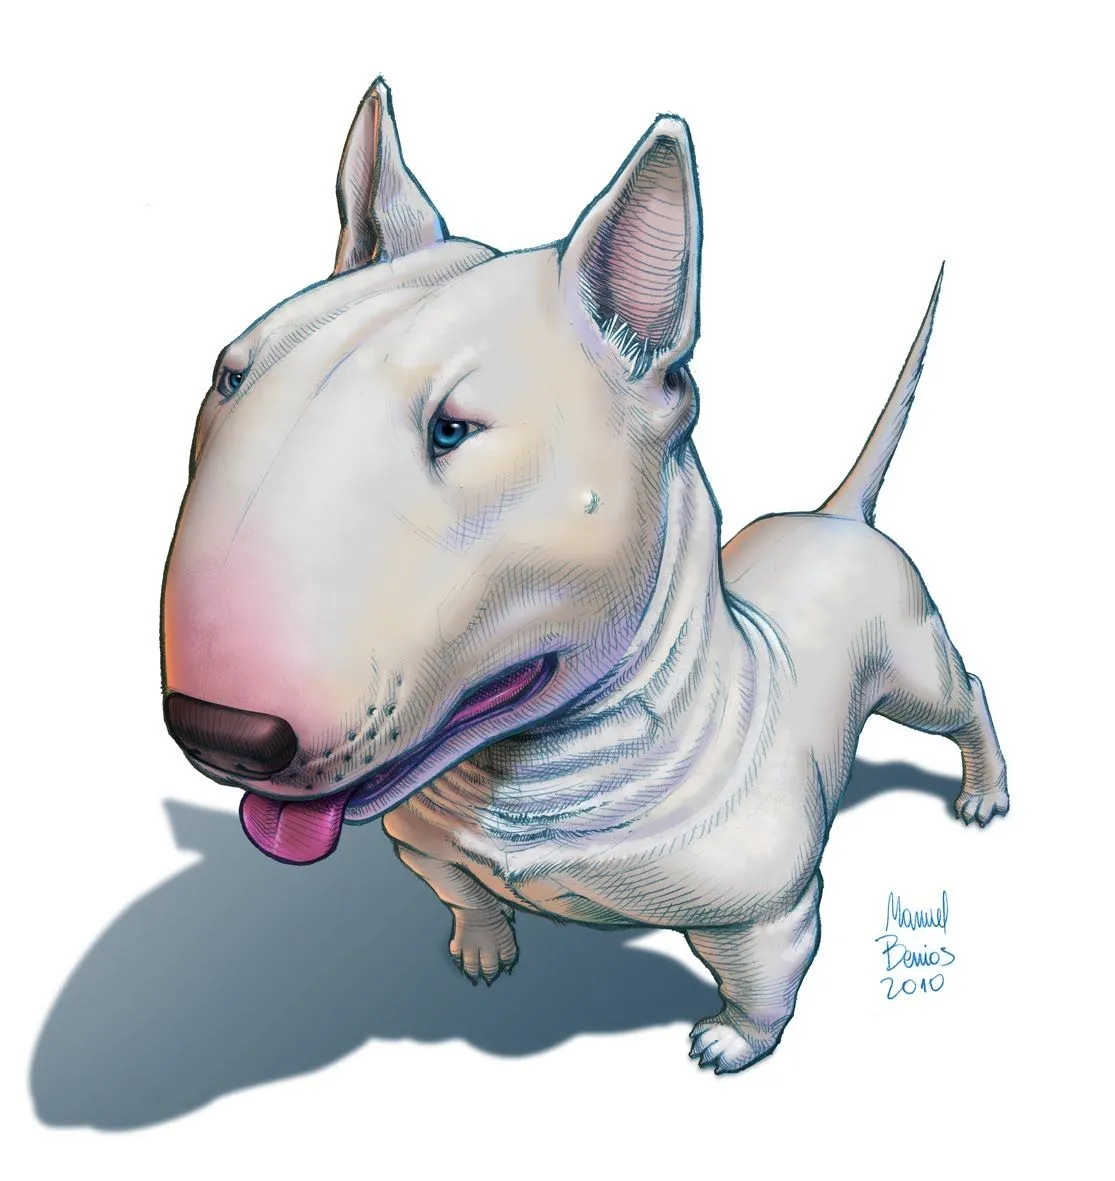 Bull terrier dibujo - Imagui